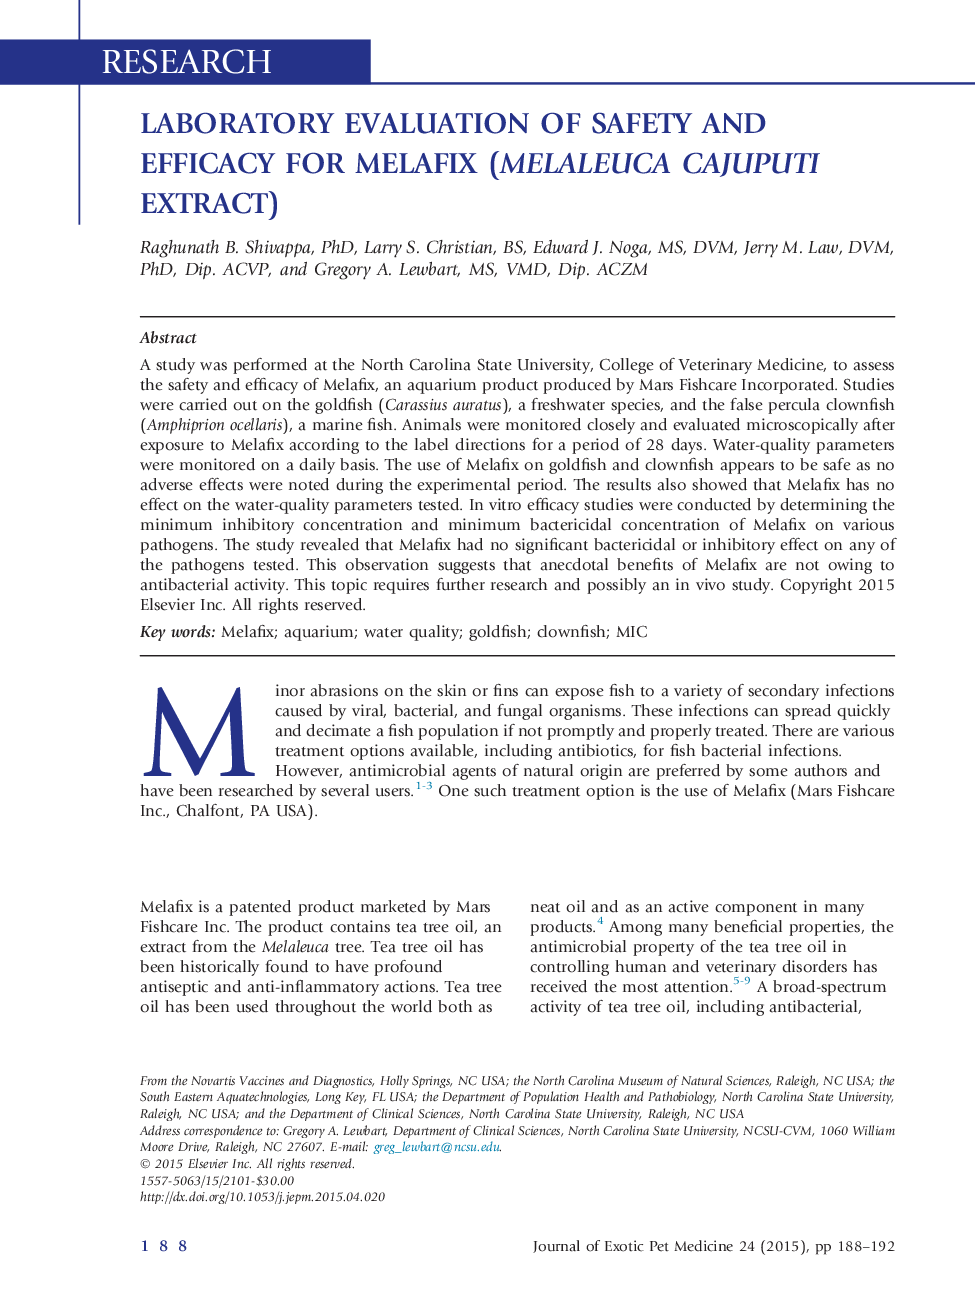 Laboratory Evaluation of Safety and Efficacy for Melafix (Melaleuca cajuputi Extract)